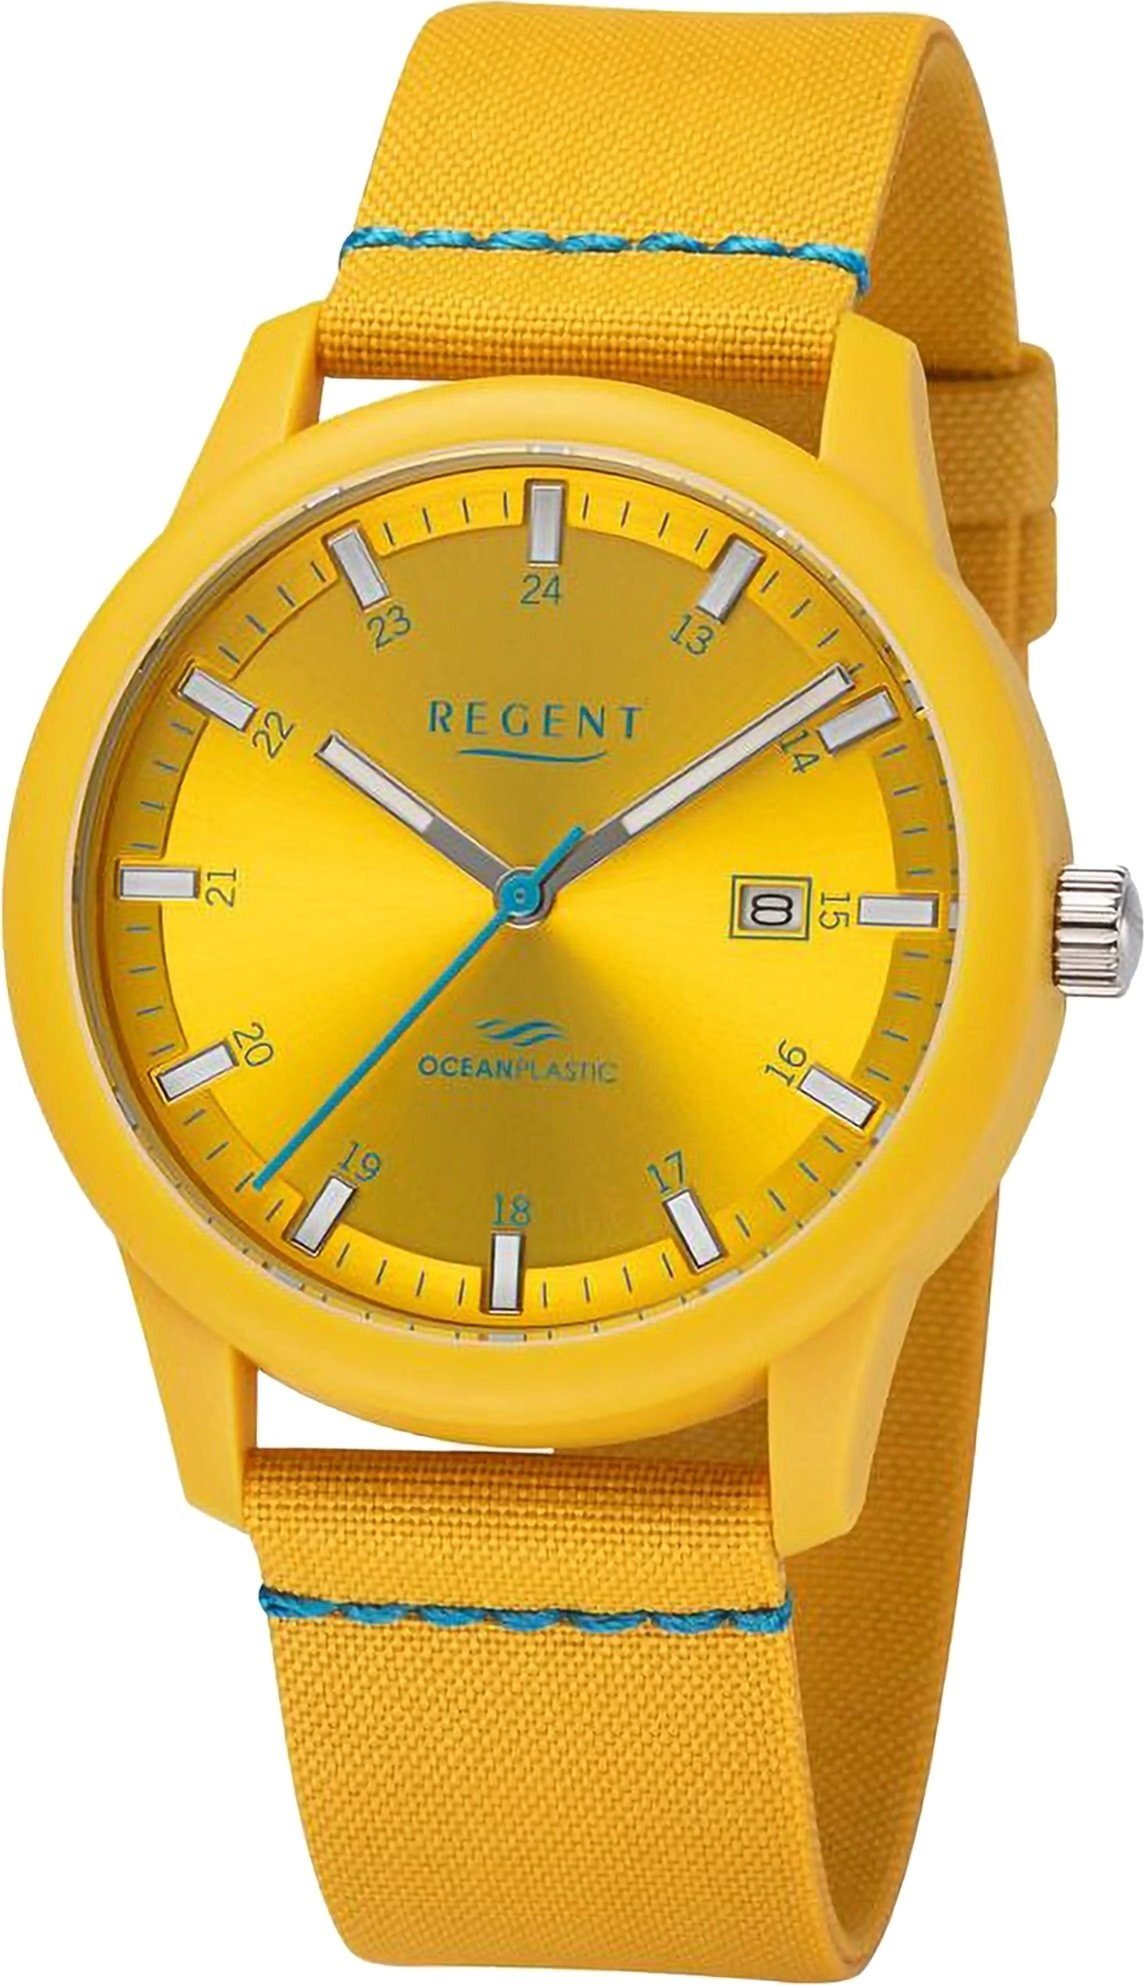 extra (ca. Regent Herren Analog, Herren Armbanduhr 40mm), rund, Quarzuhr Nylonarmband Armbanduhr Regent groß